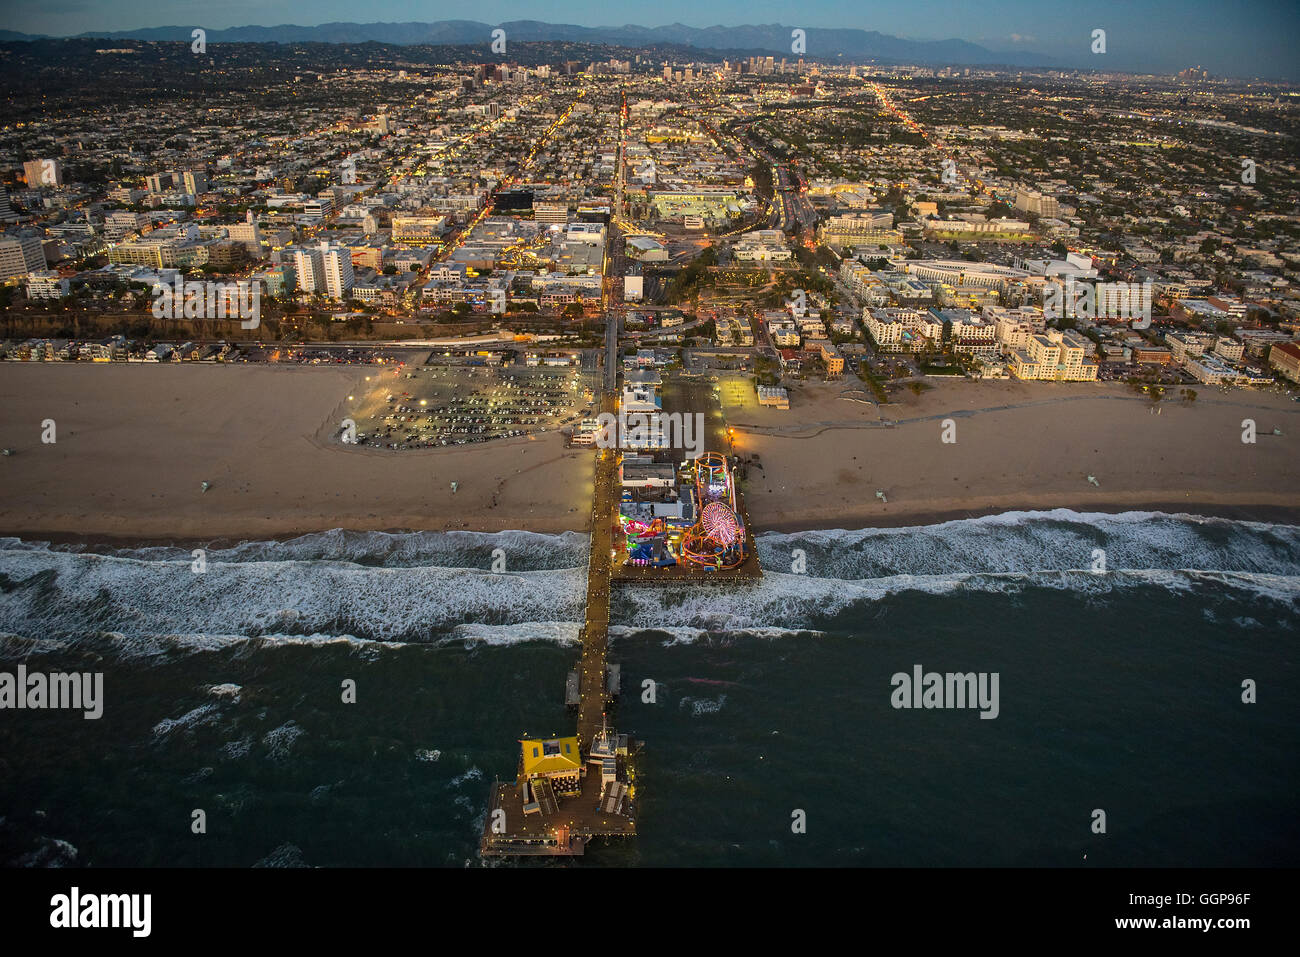 Aerial view of Santa Monica Pier in Los Angeles cityscape, California, United States Stock Photo